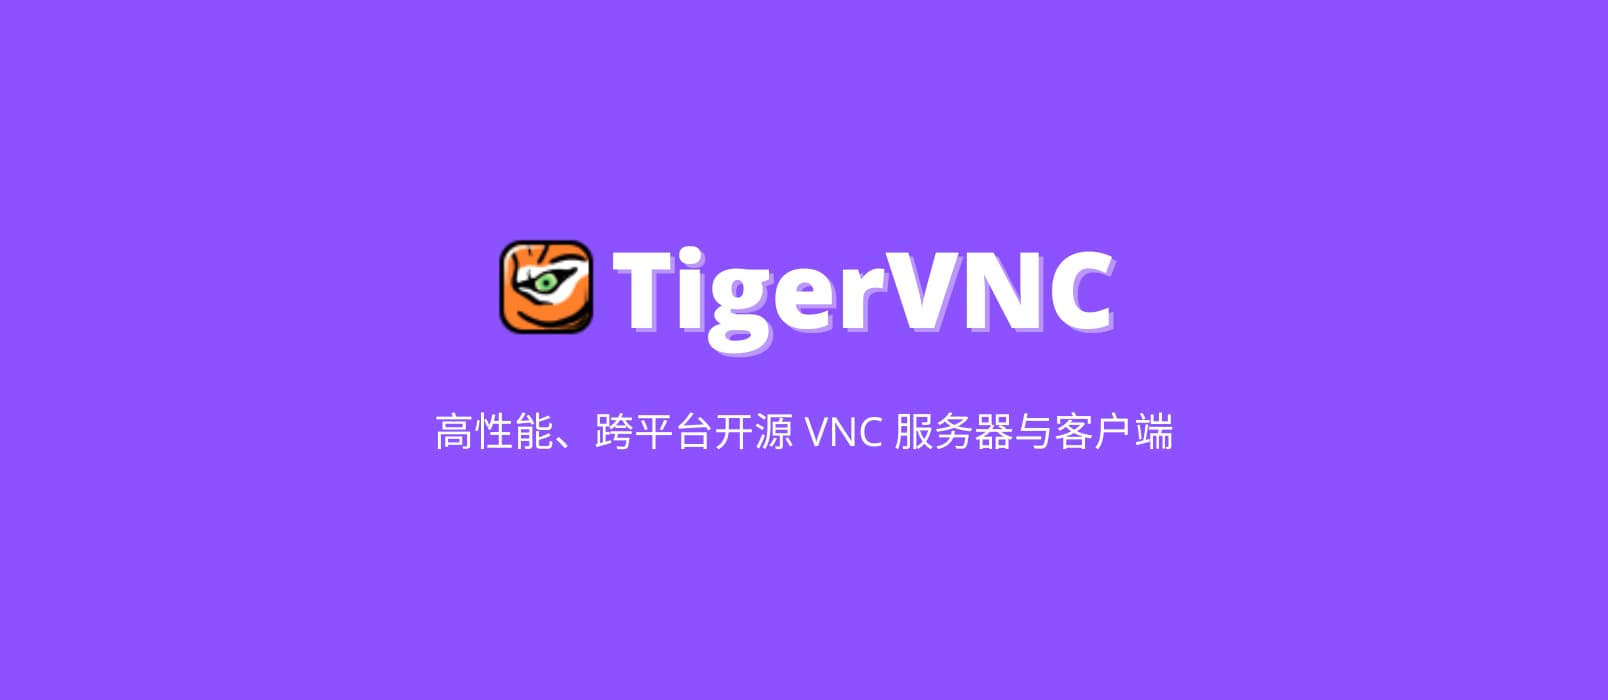 TigerVNC - 高性能、跨平台开源 VNC 服务器与客户端